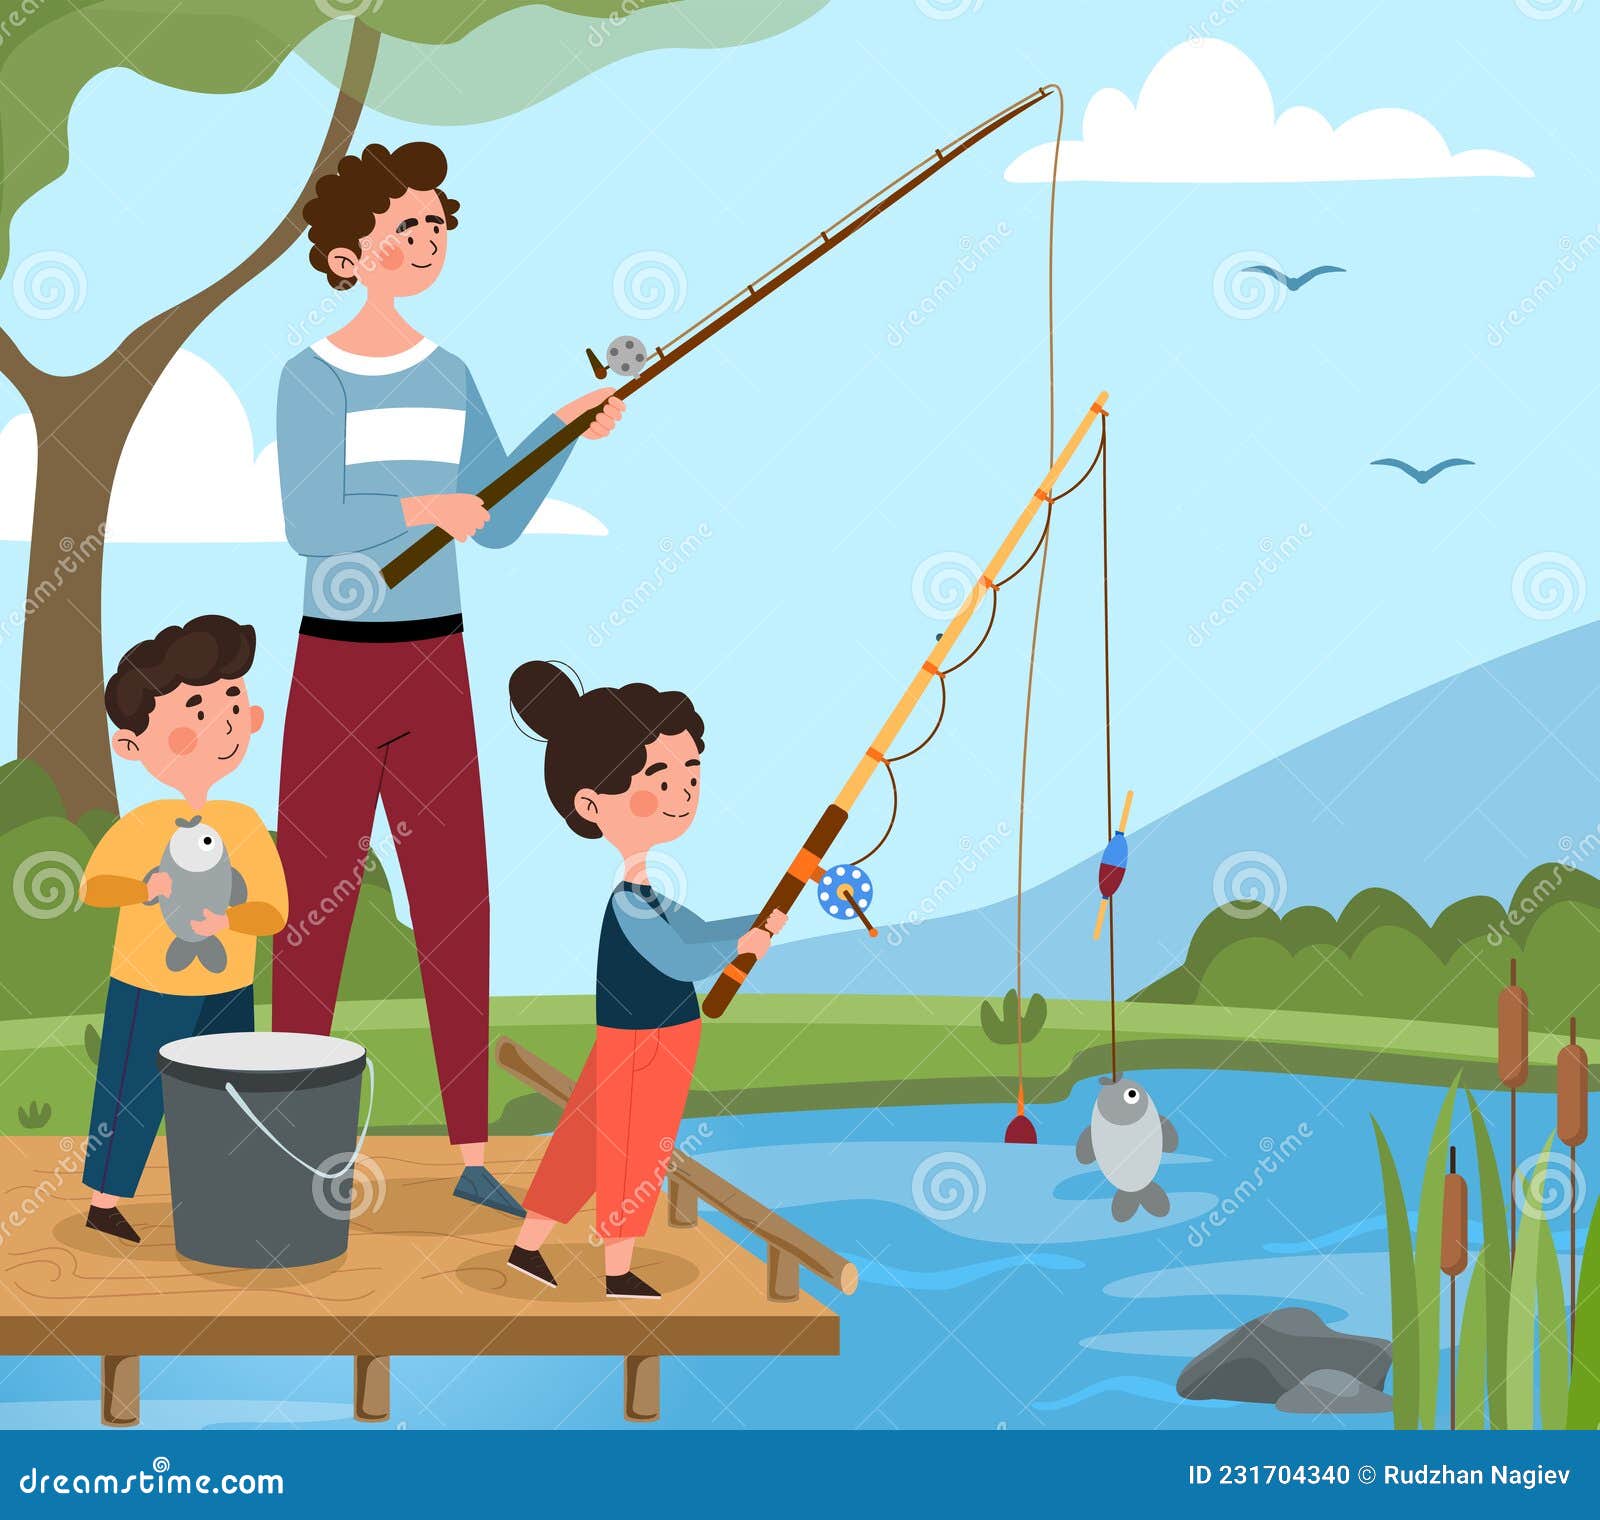 Fishing with Children Concept Stock Illustration - Illustration of